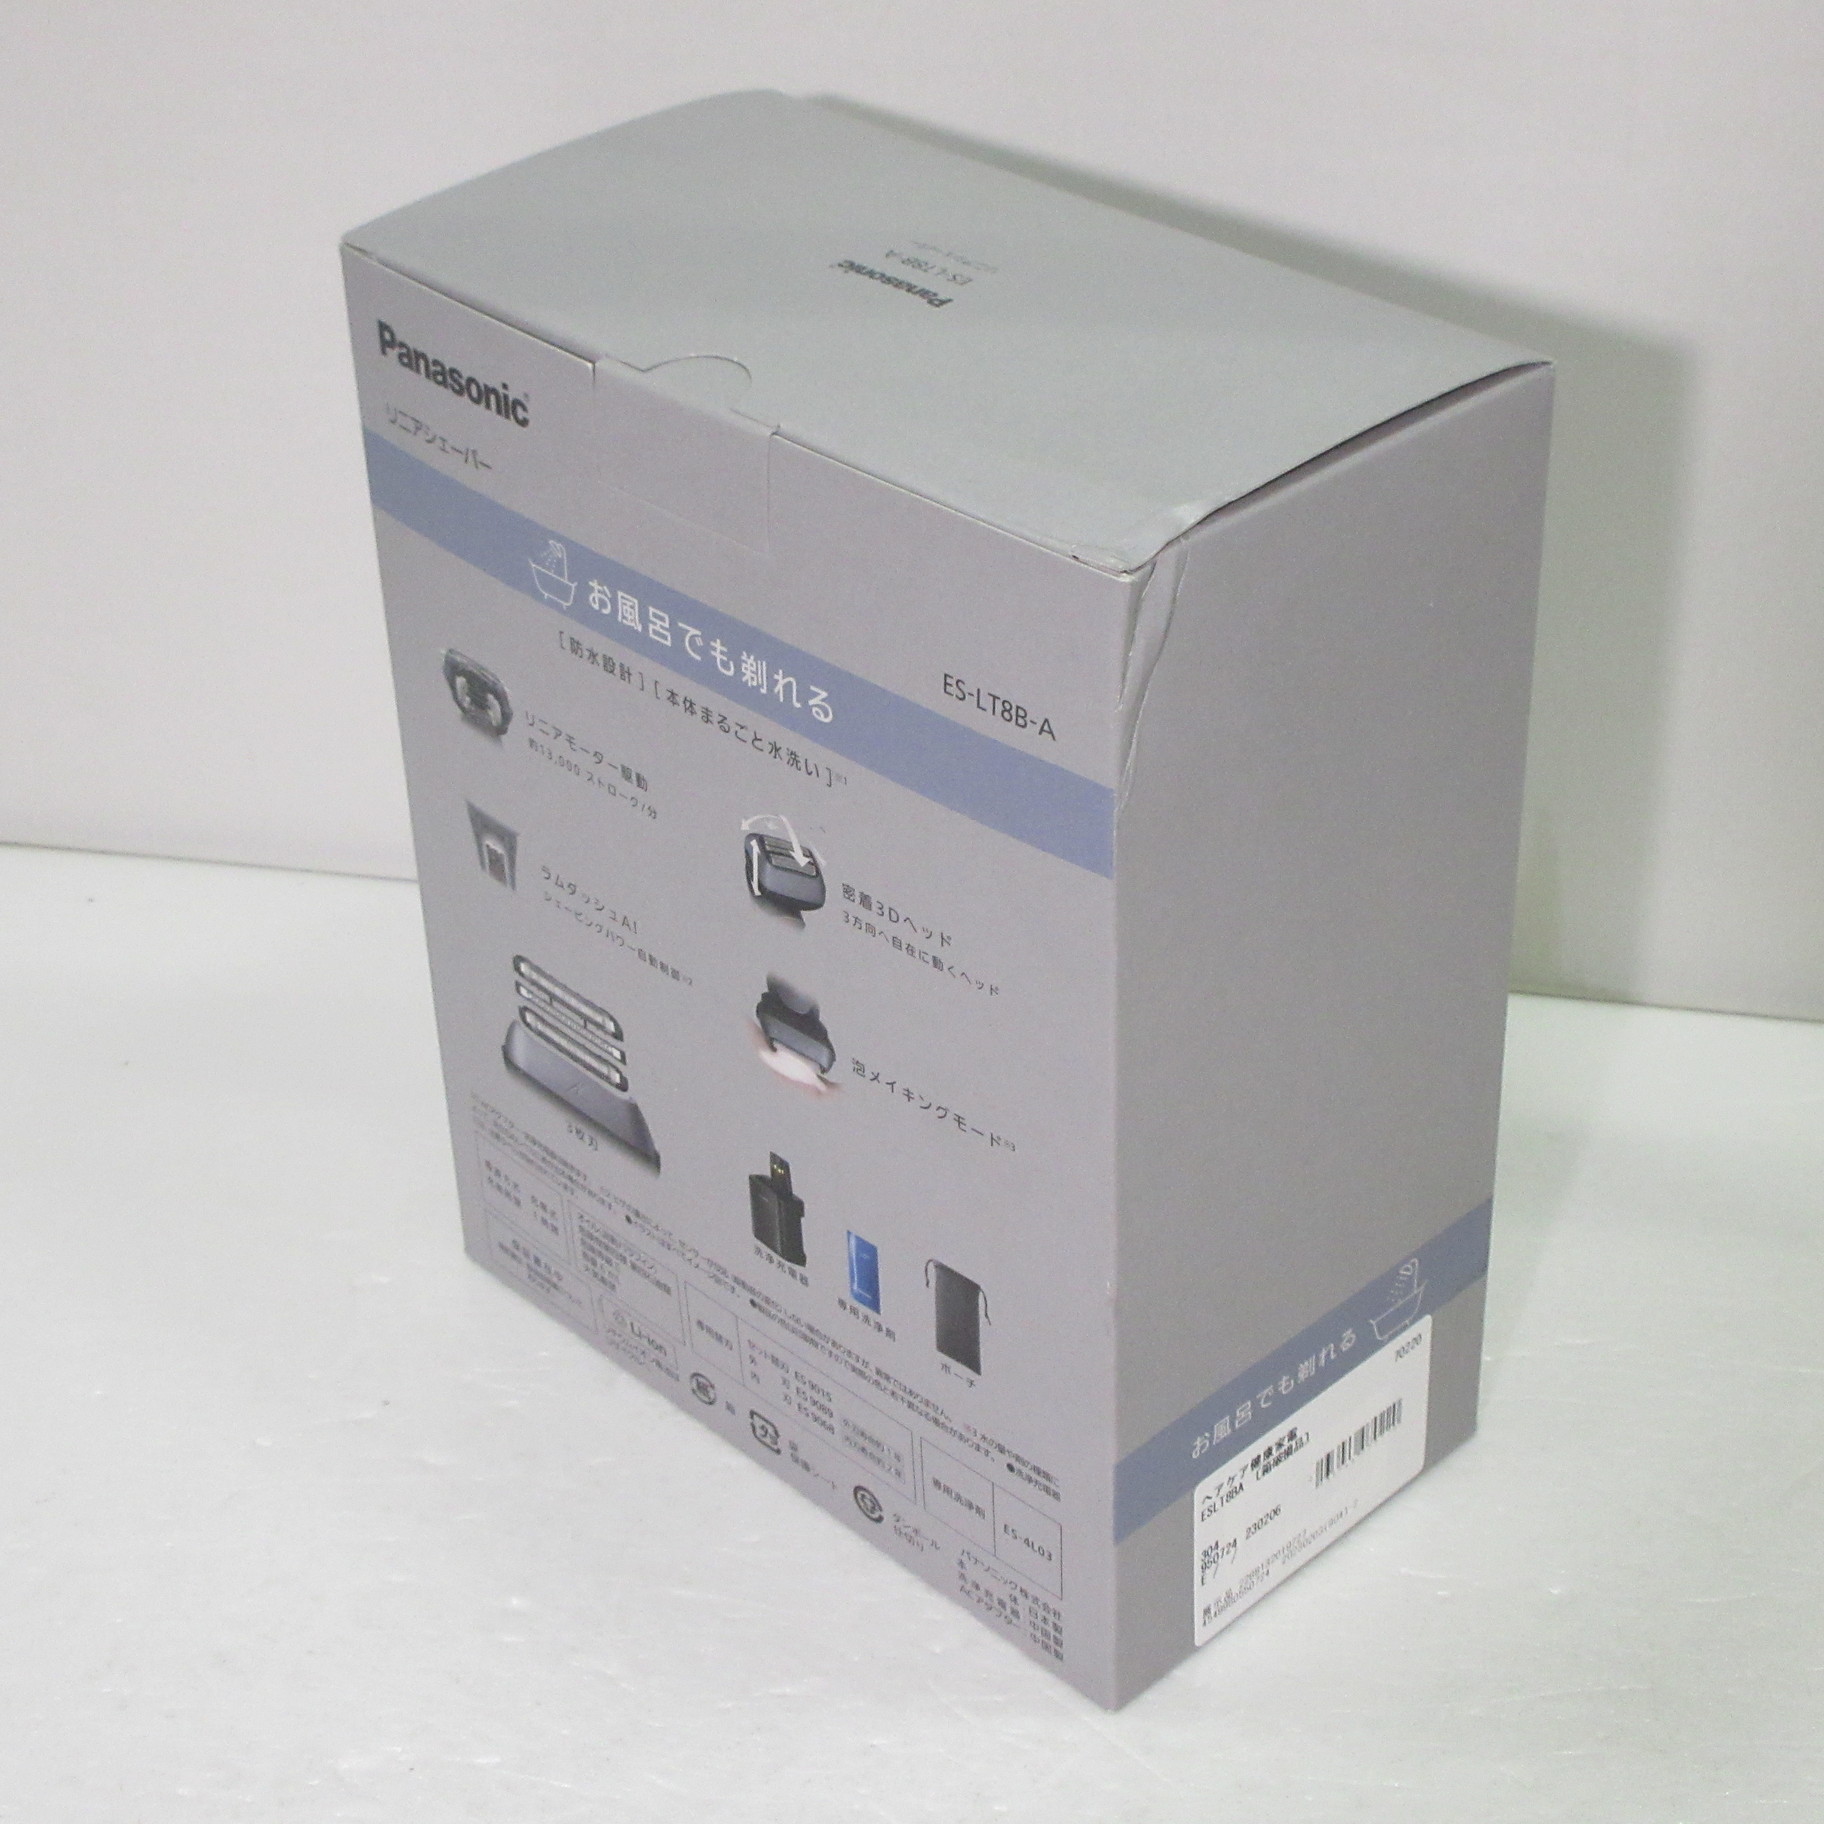 Panasonic　ラムダッシュ3枚刃 ES-LT8B-A　青　外箱なし　展示品メーカー